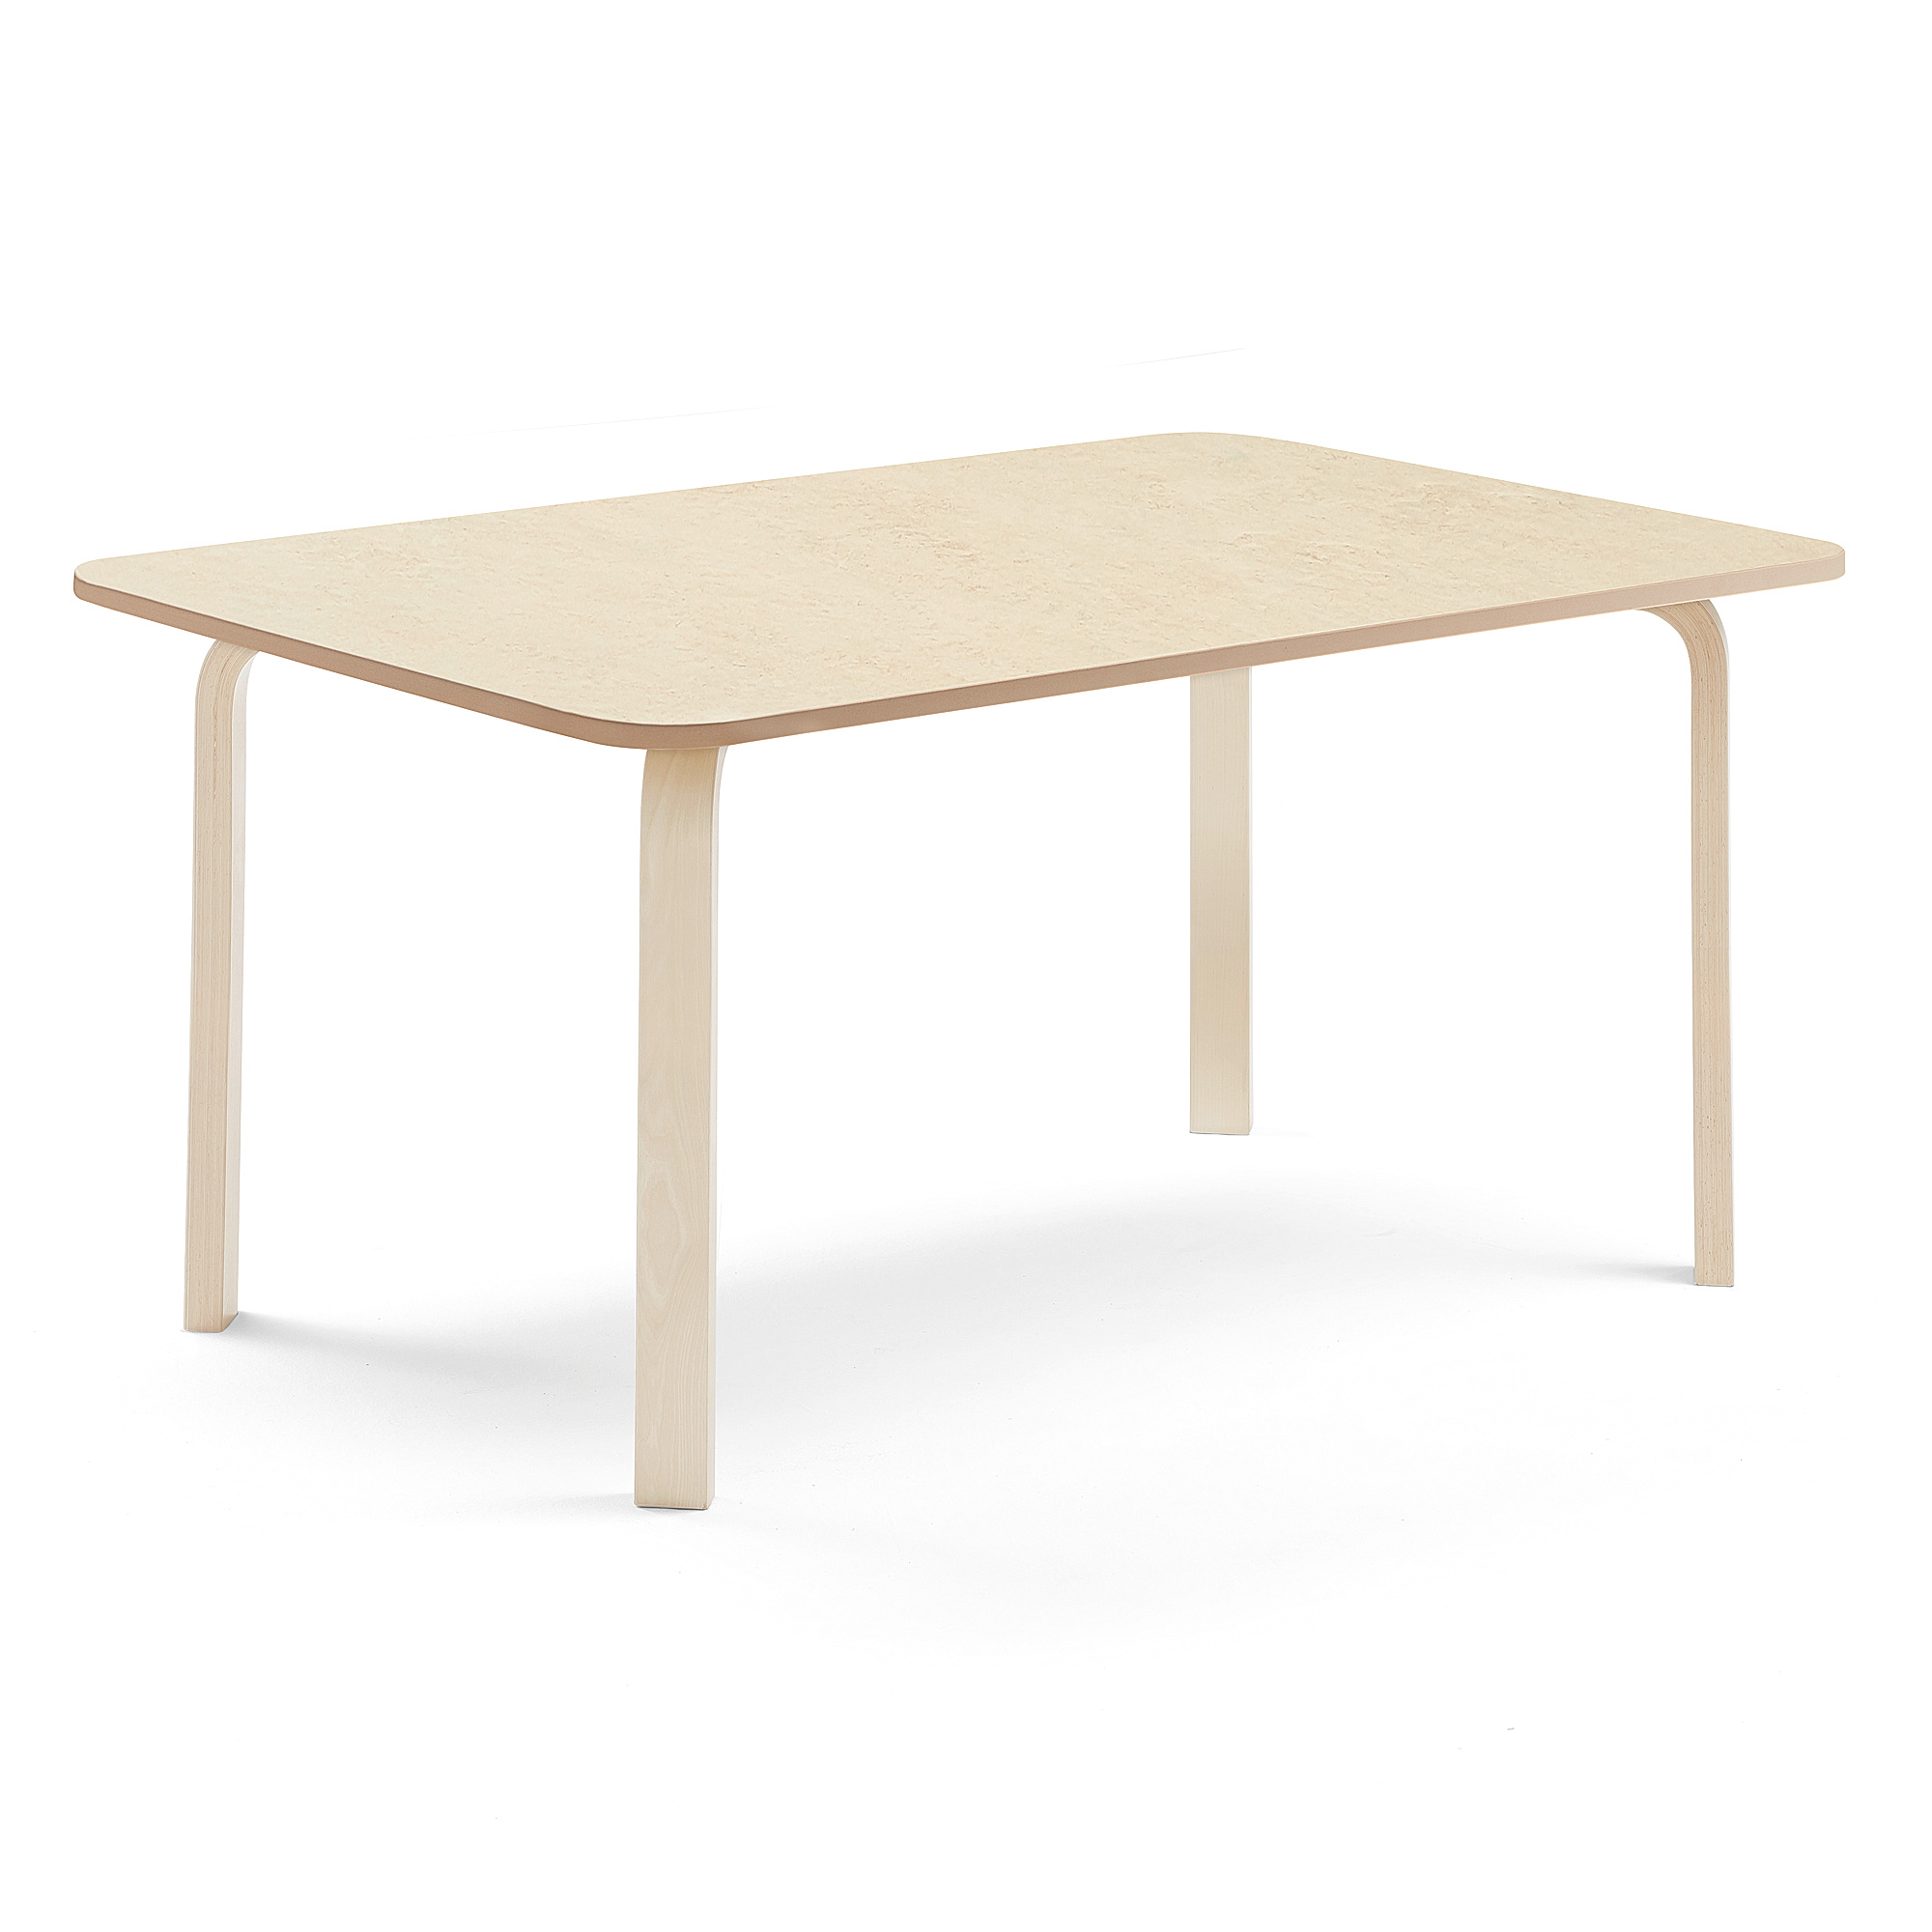 Stůl ELTON, 1800x700x640 mm, bříza, akustické linoleum, béžová